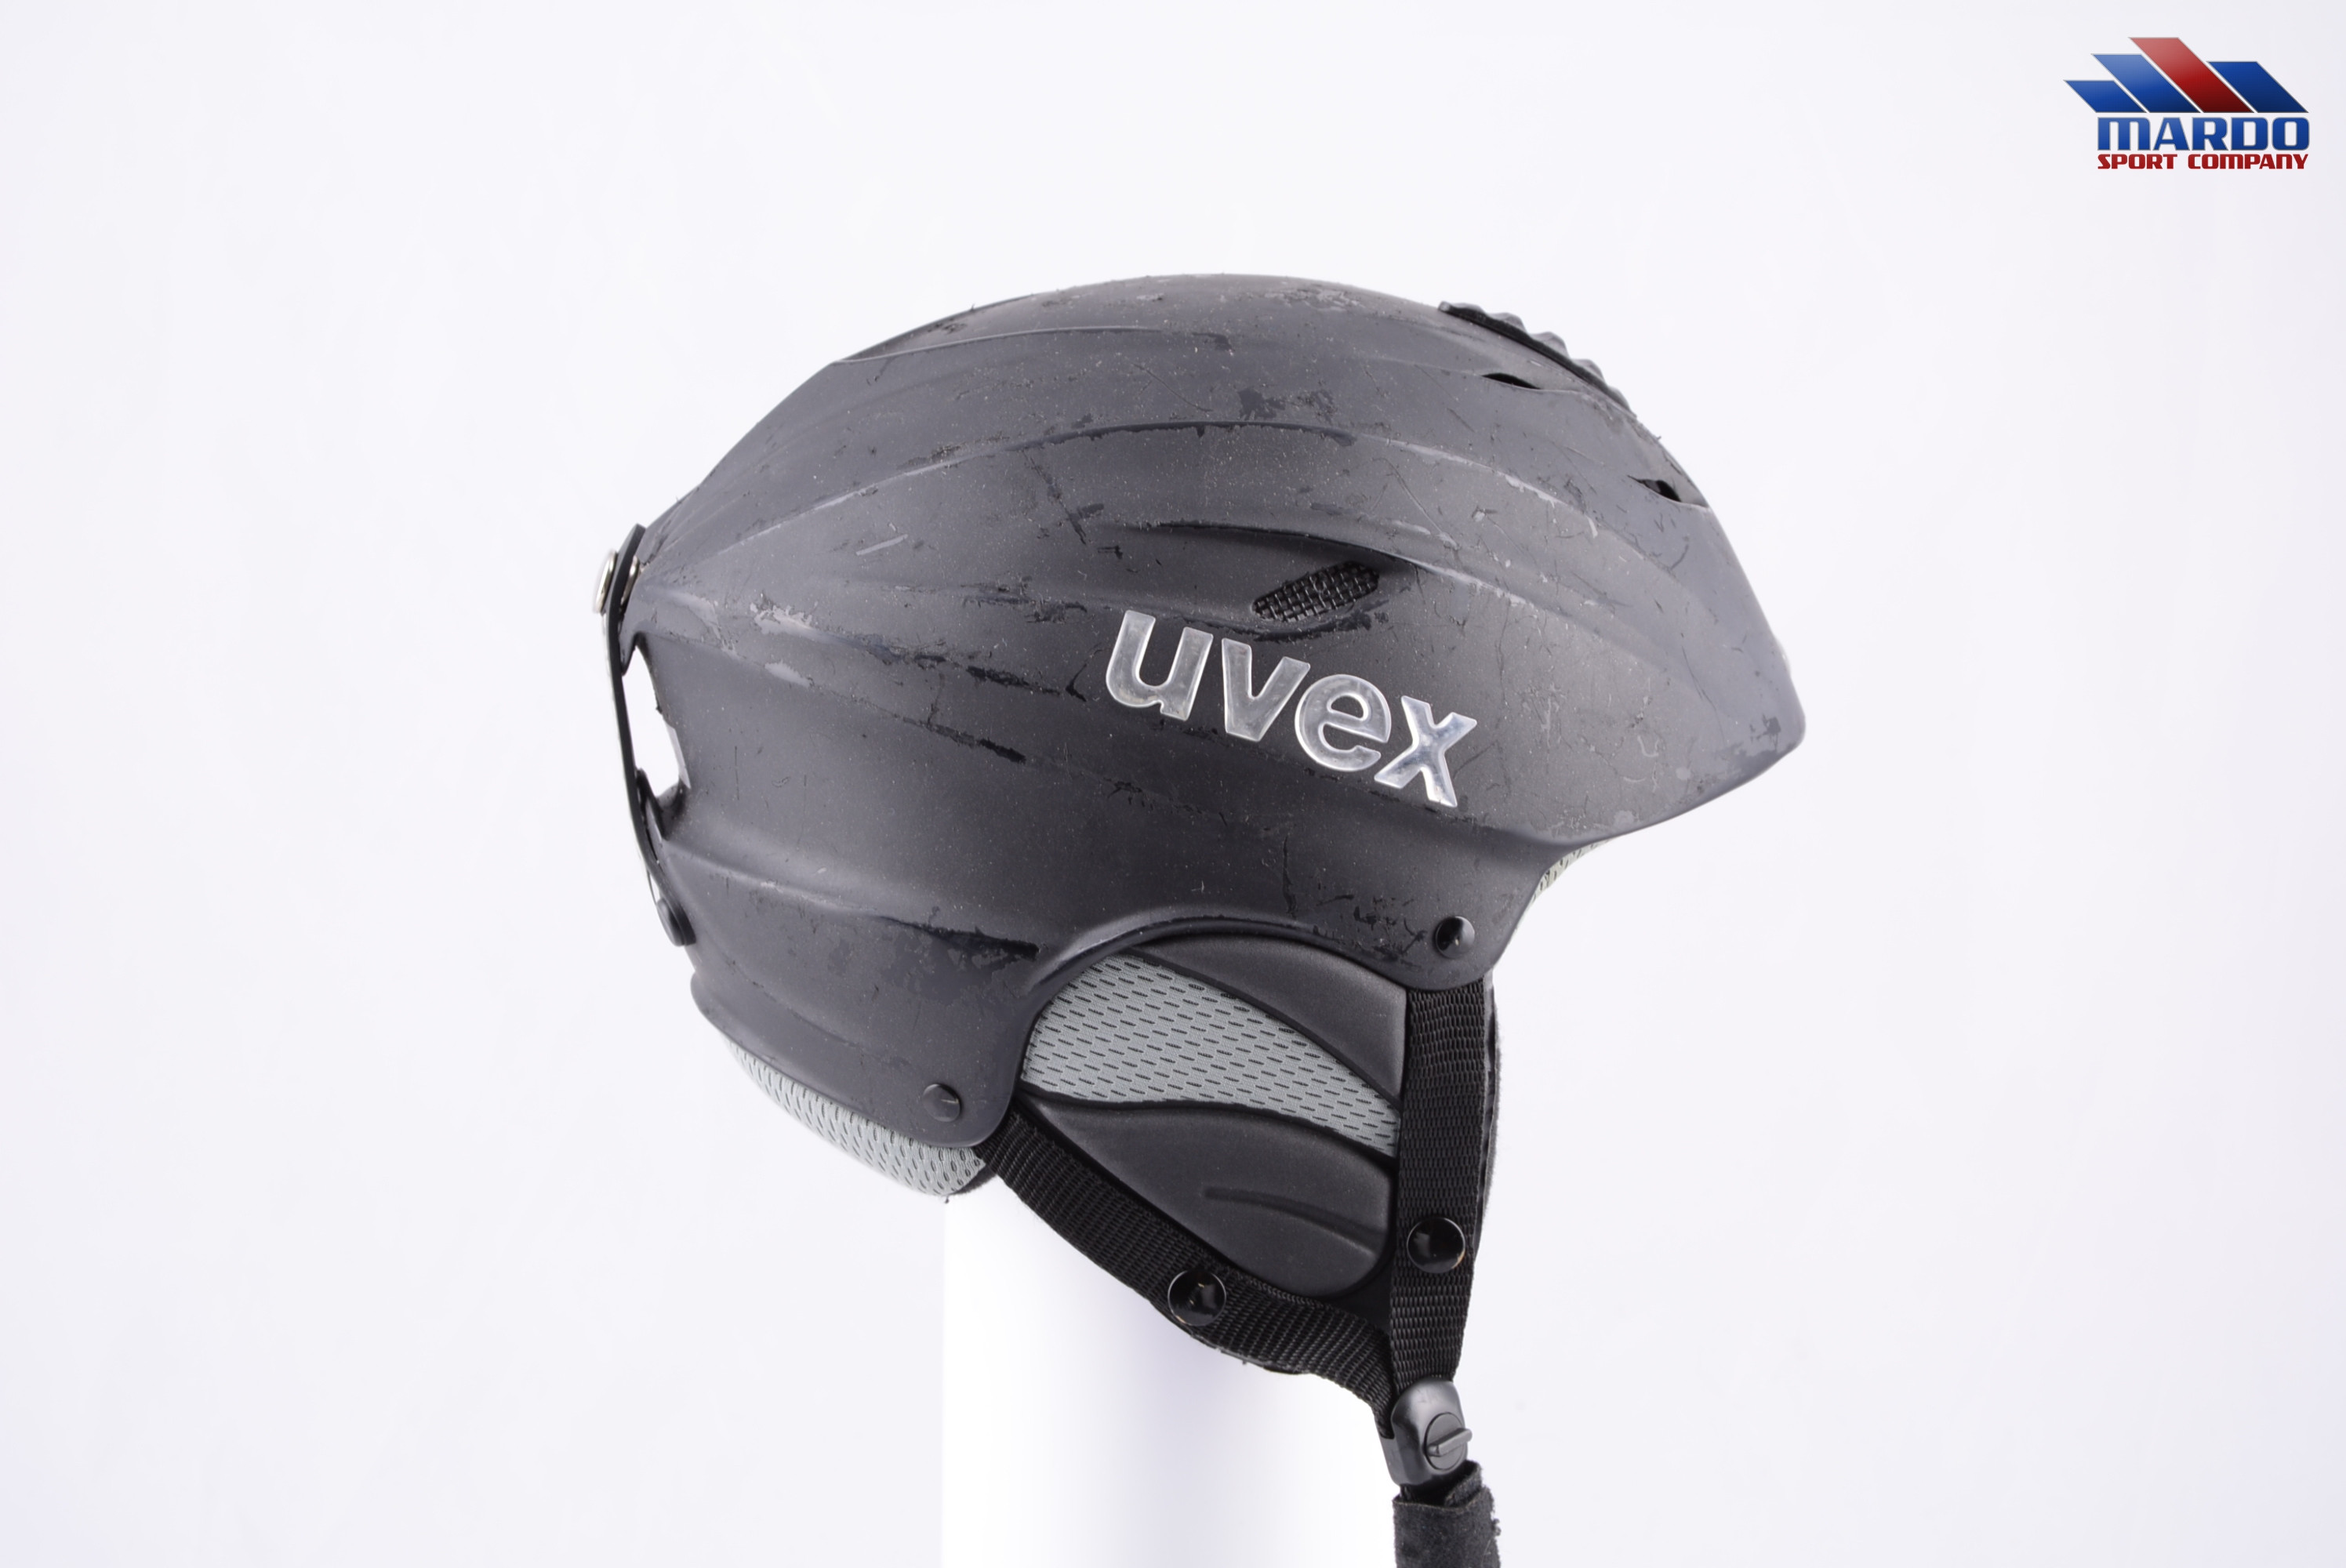 Middelen Discipline Demon ski/snowboard helmet UVEX XW 003 black, air ventilation - Mardosport.com